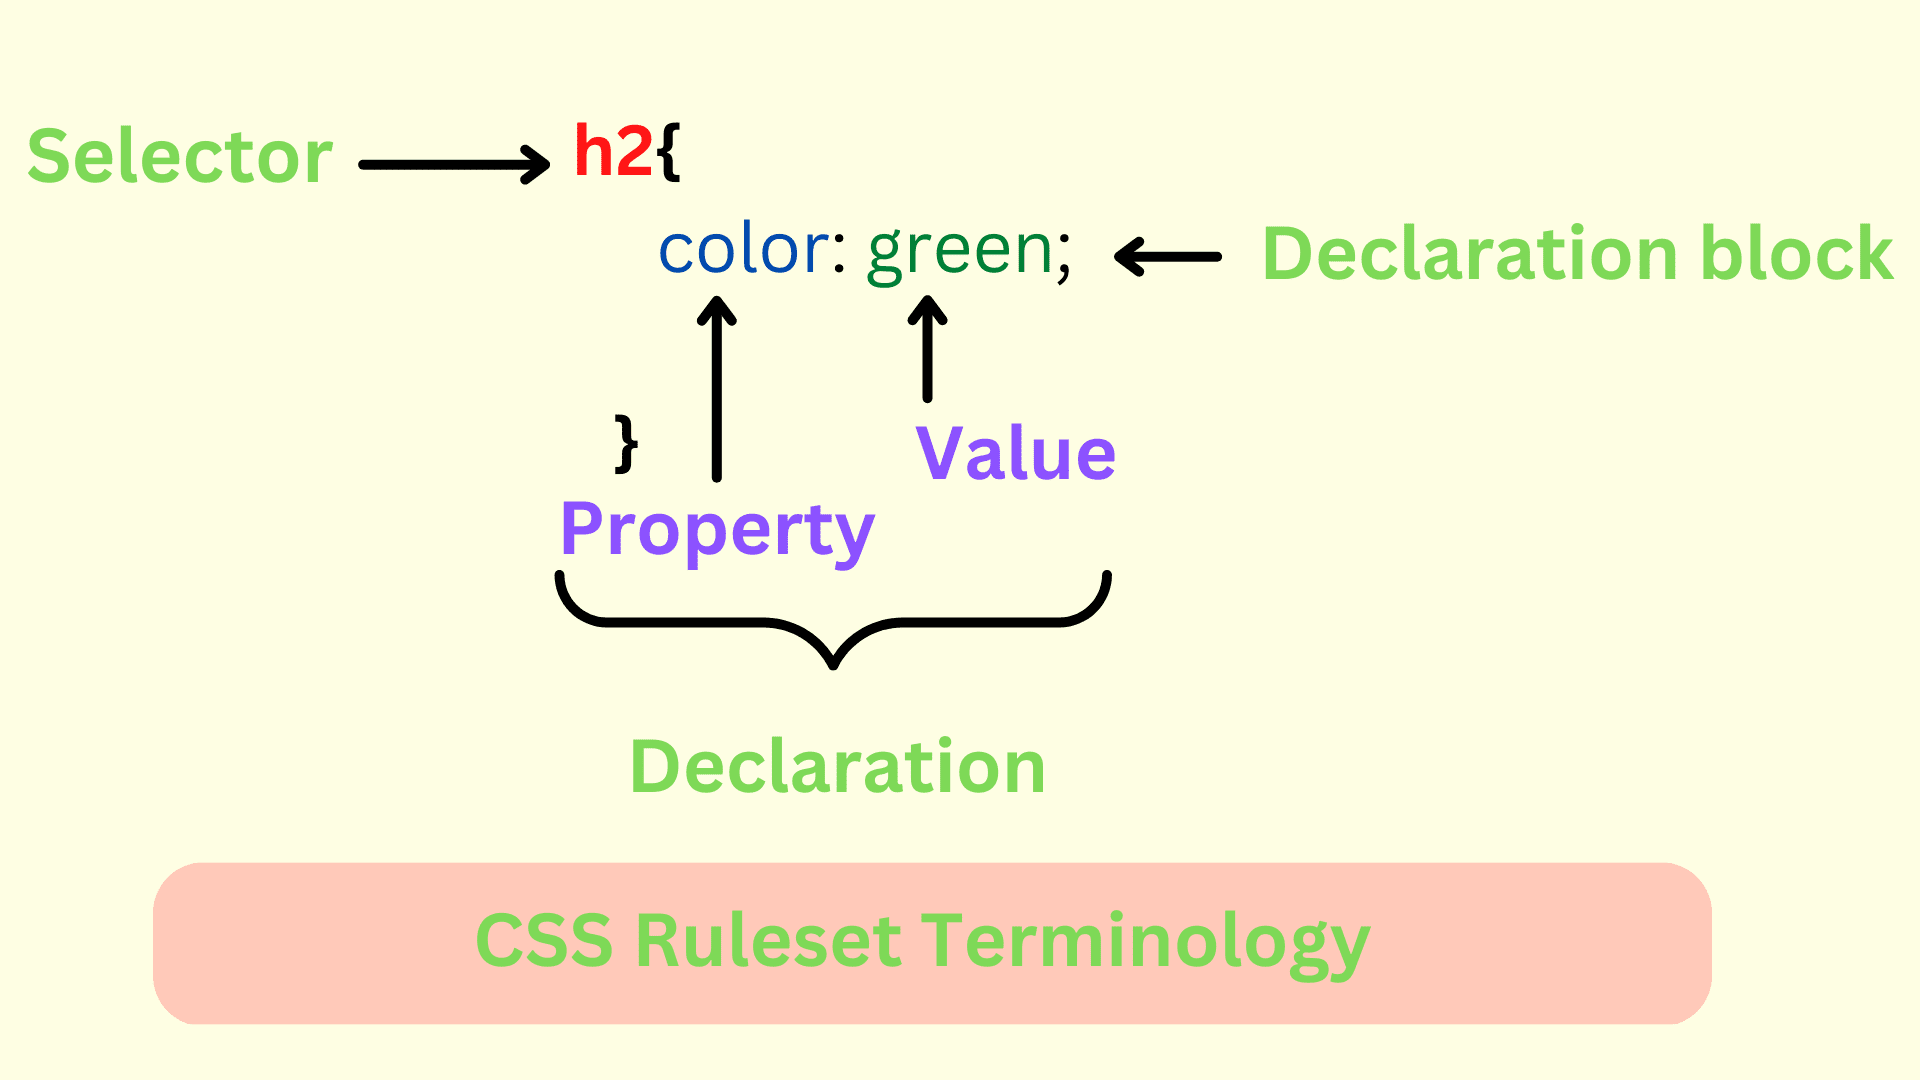 CSS Ruleset Terminology